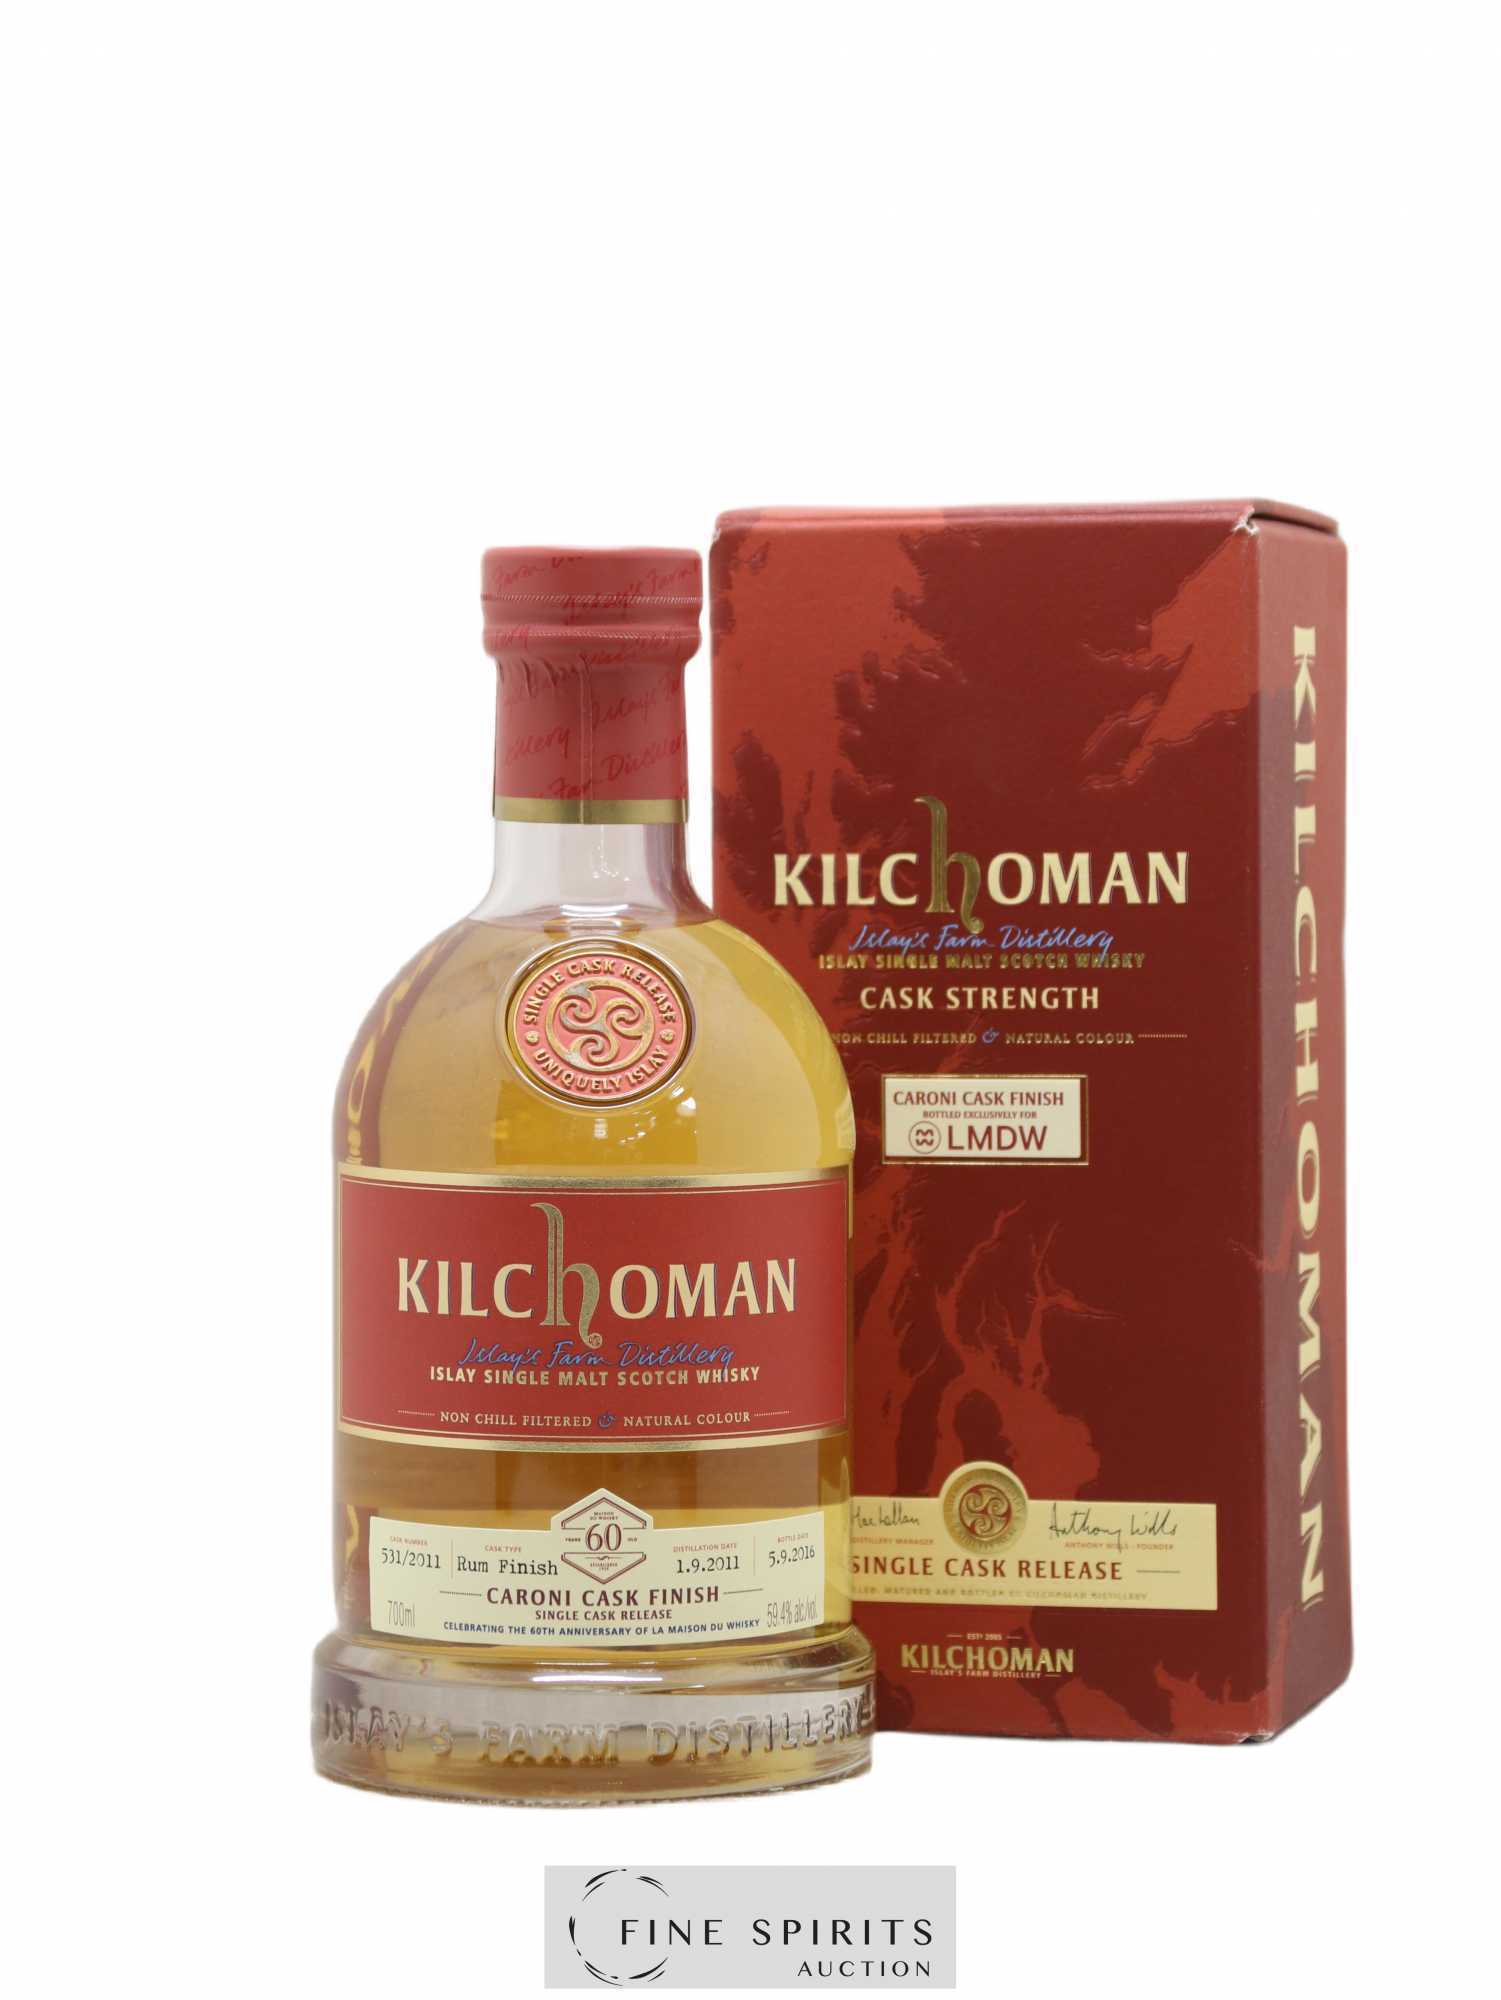 Kilchoman 2011 Of. Caroni Cask n°531-2011 - One of 258 - bottled 2016 LMDW 60th Anniversary 